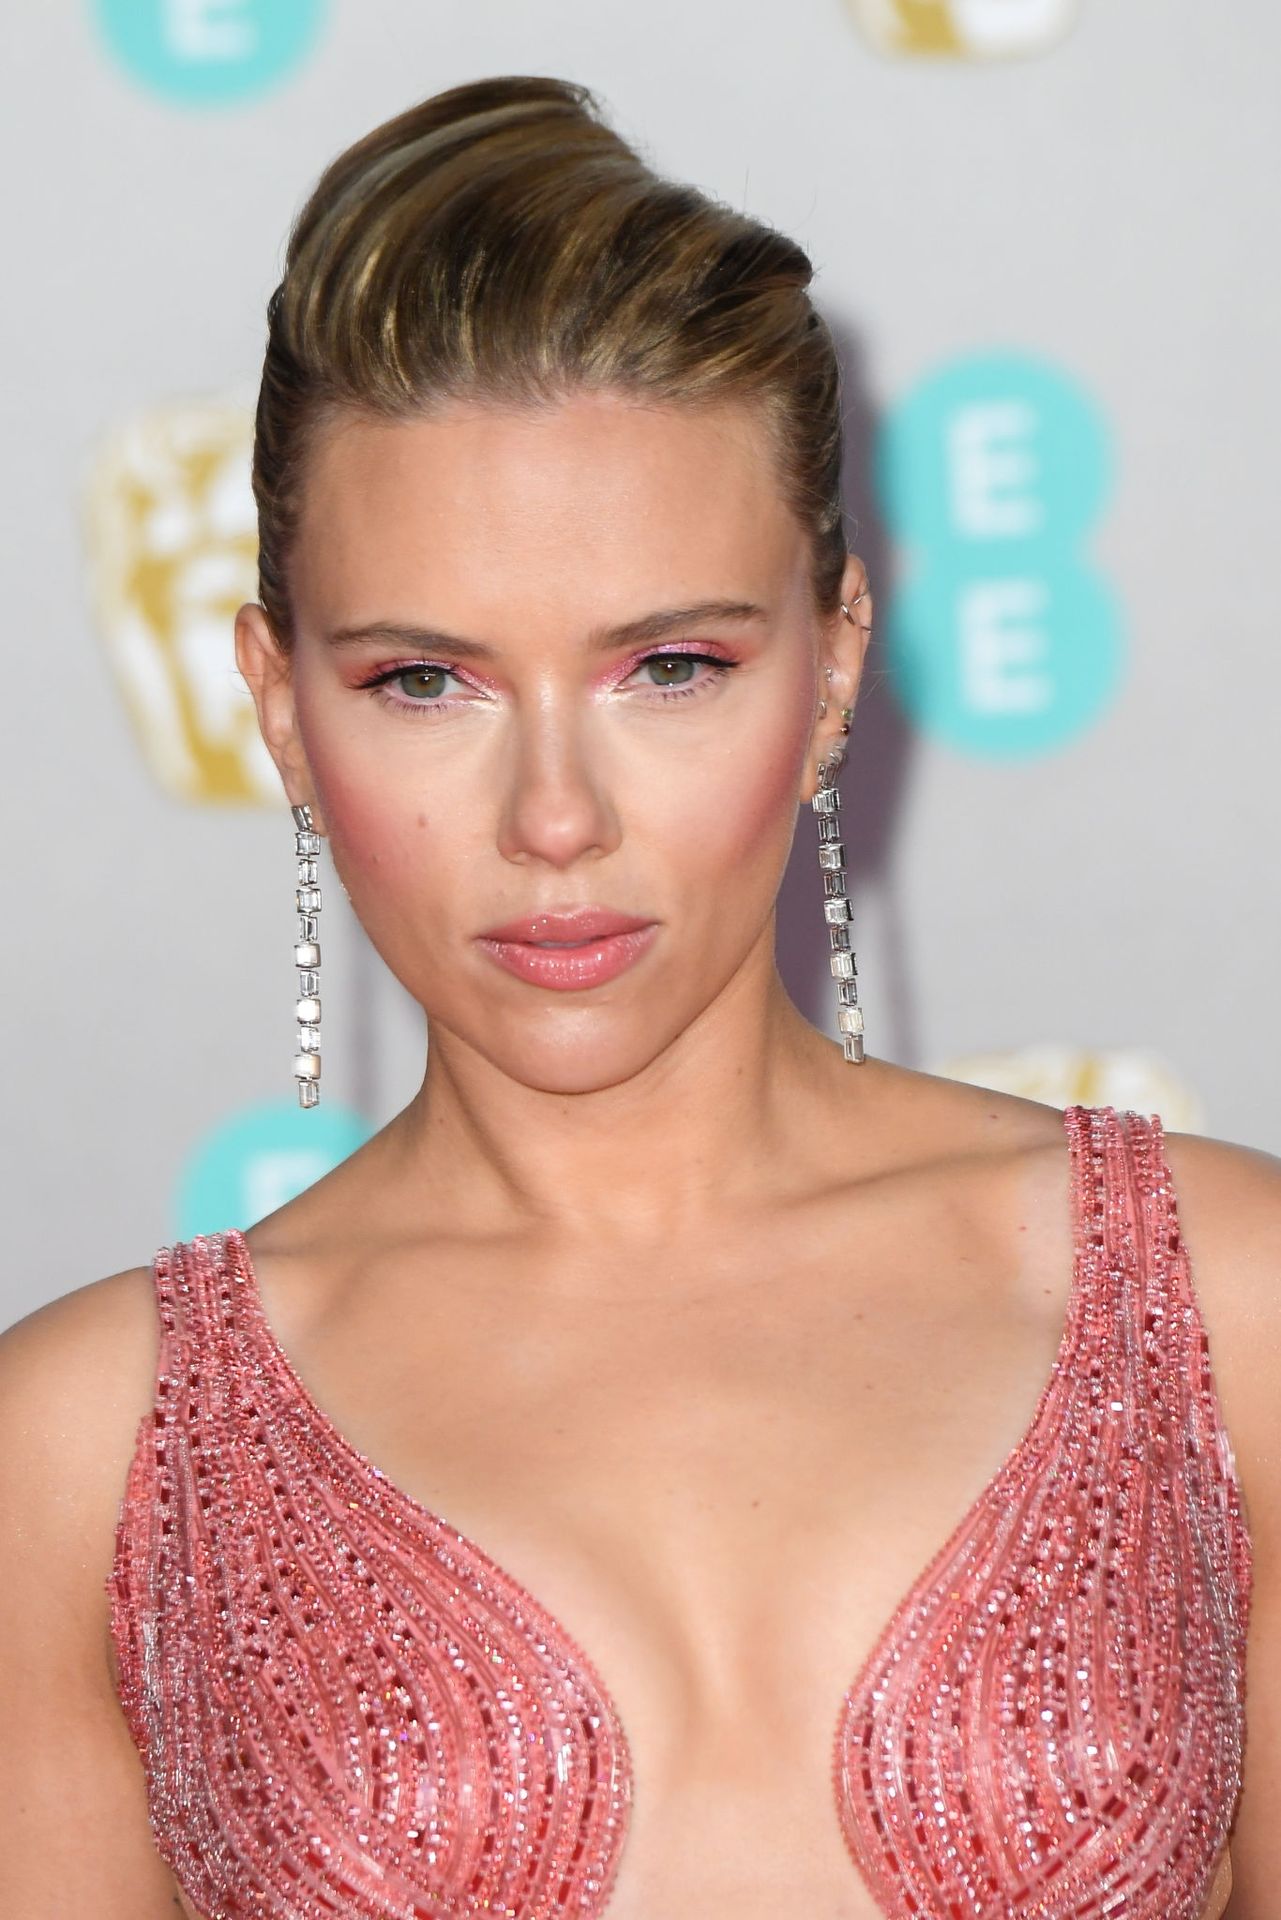 Scarlett Johansson Shines at The EE British Academy Film Awards (
45 Photos)